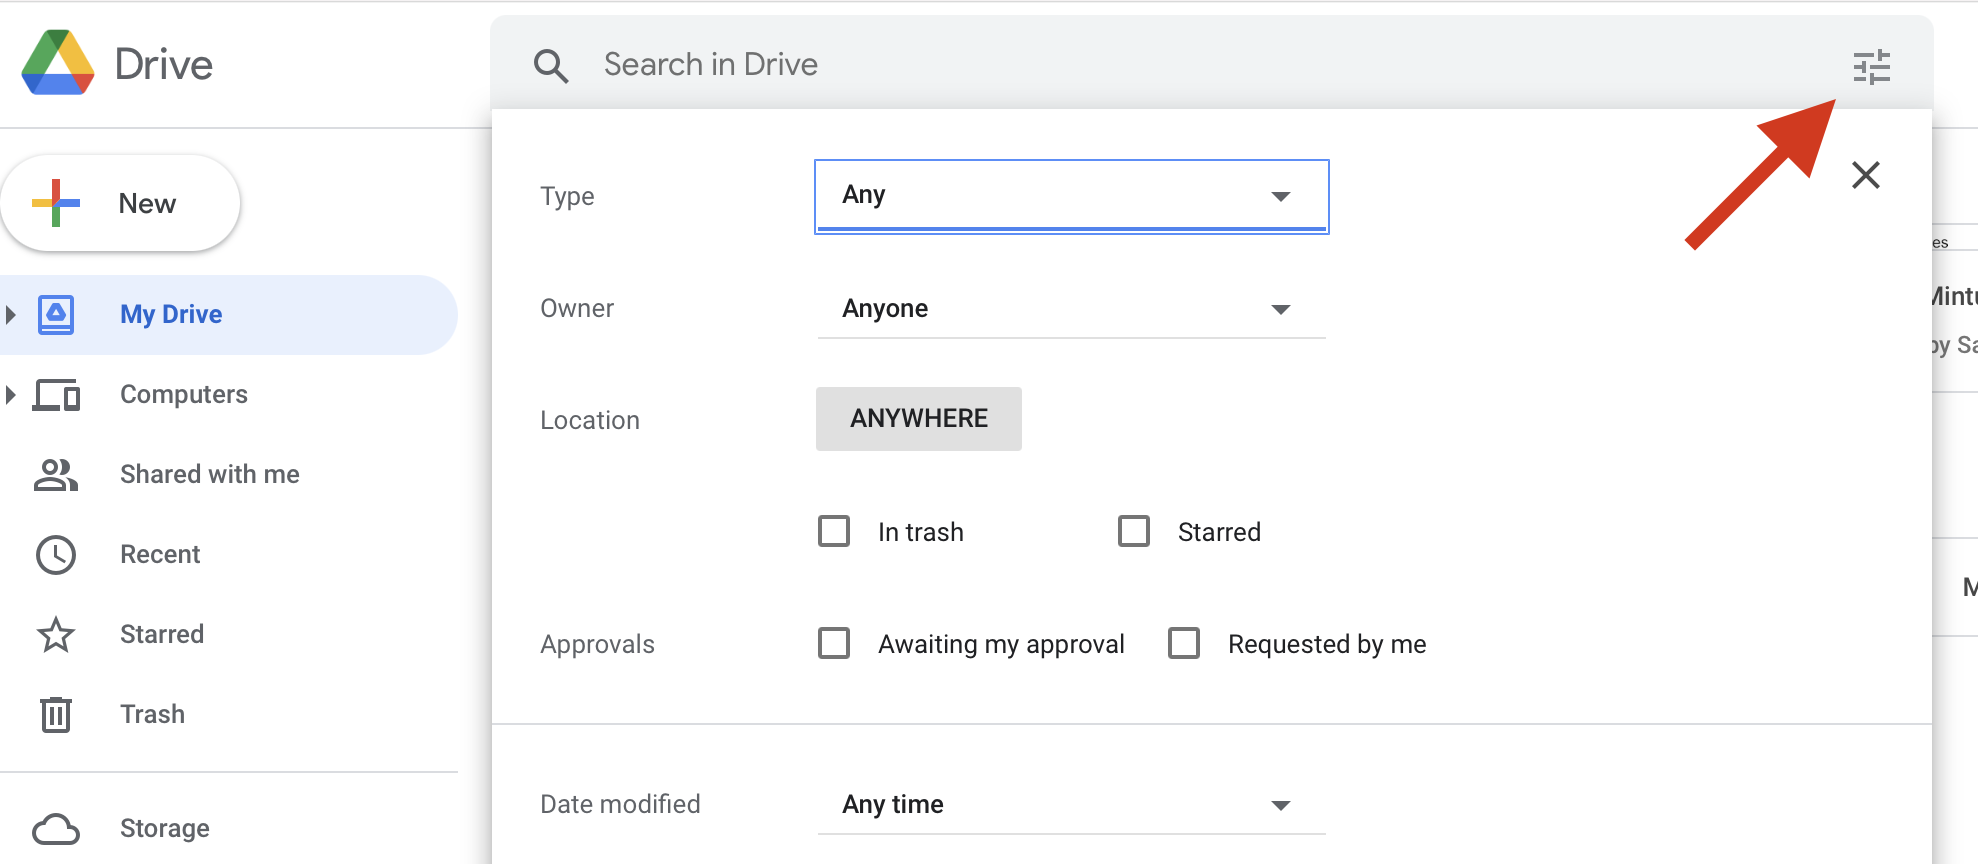 Google Drive's current ‘advanced search’ UI